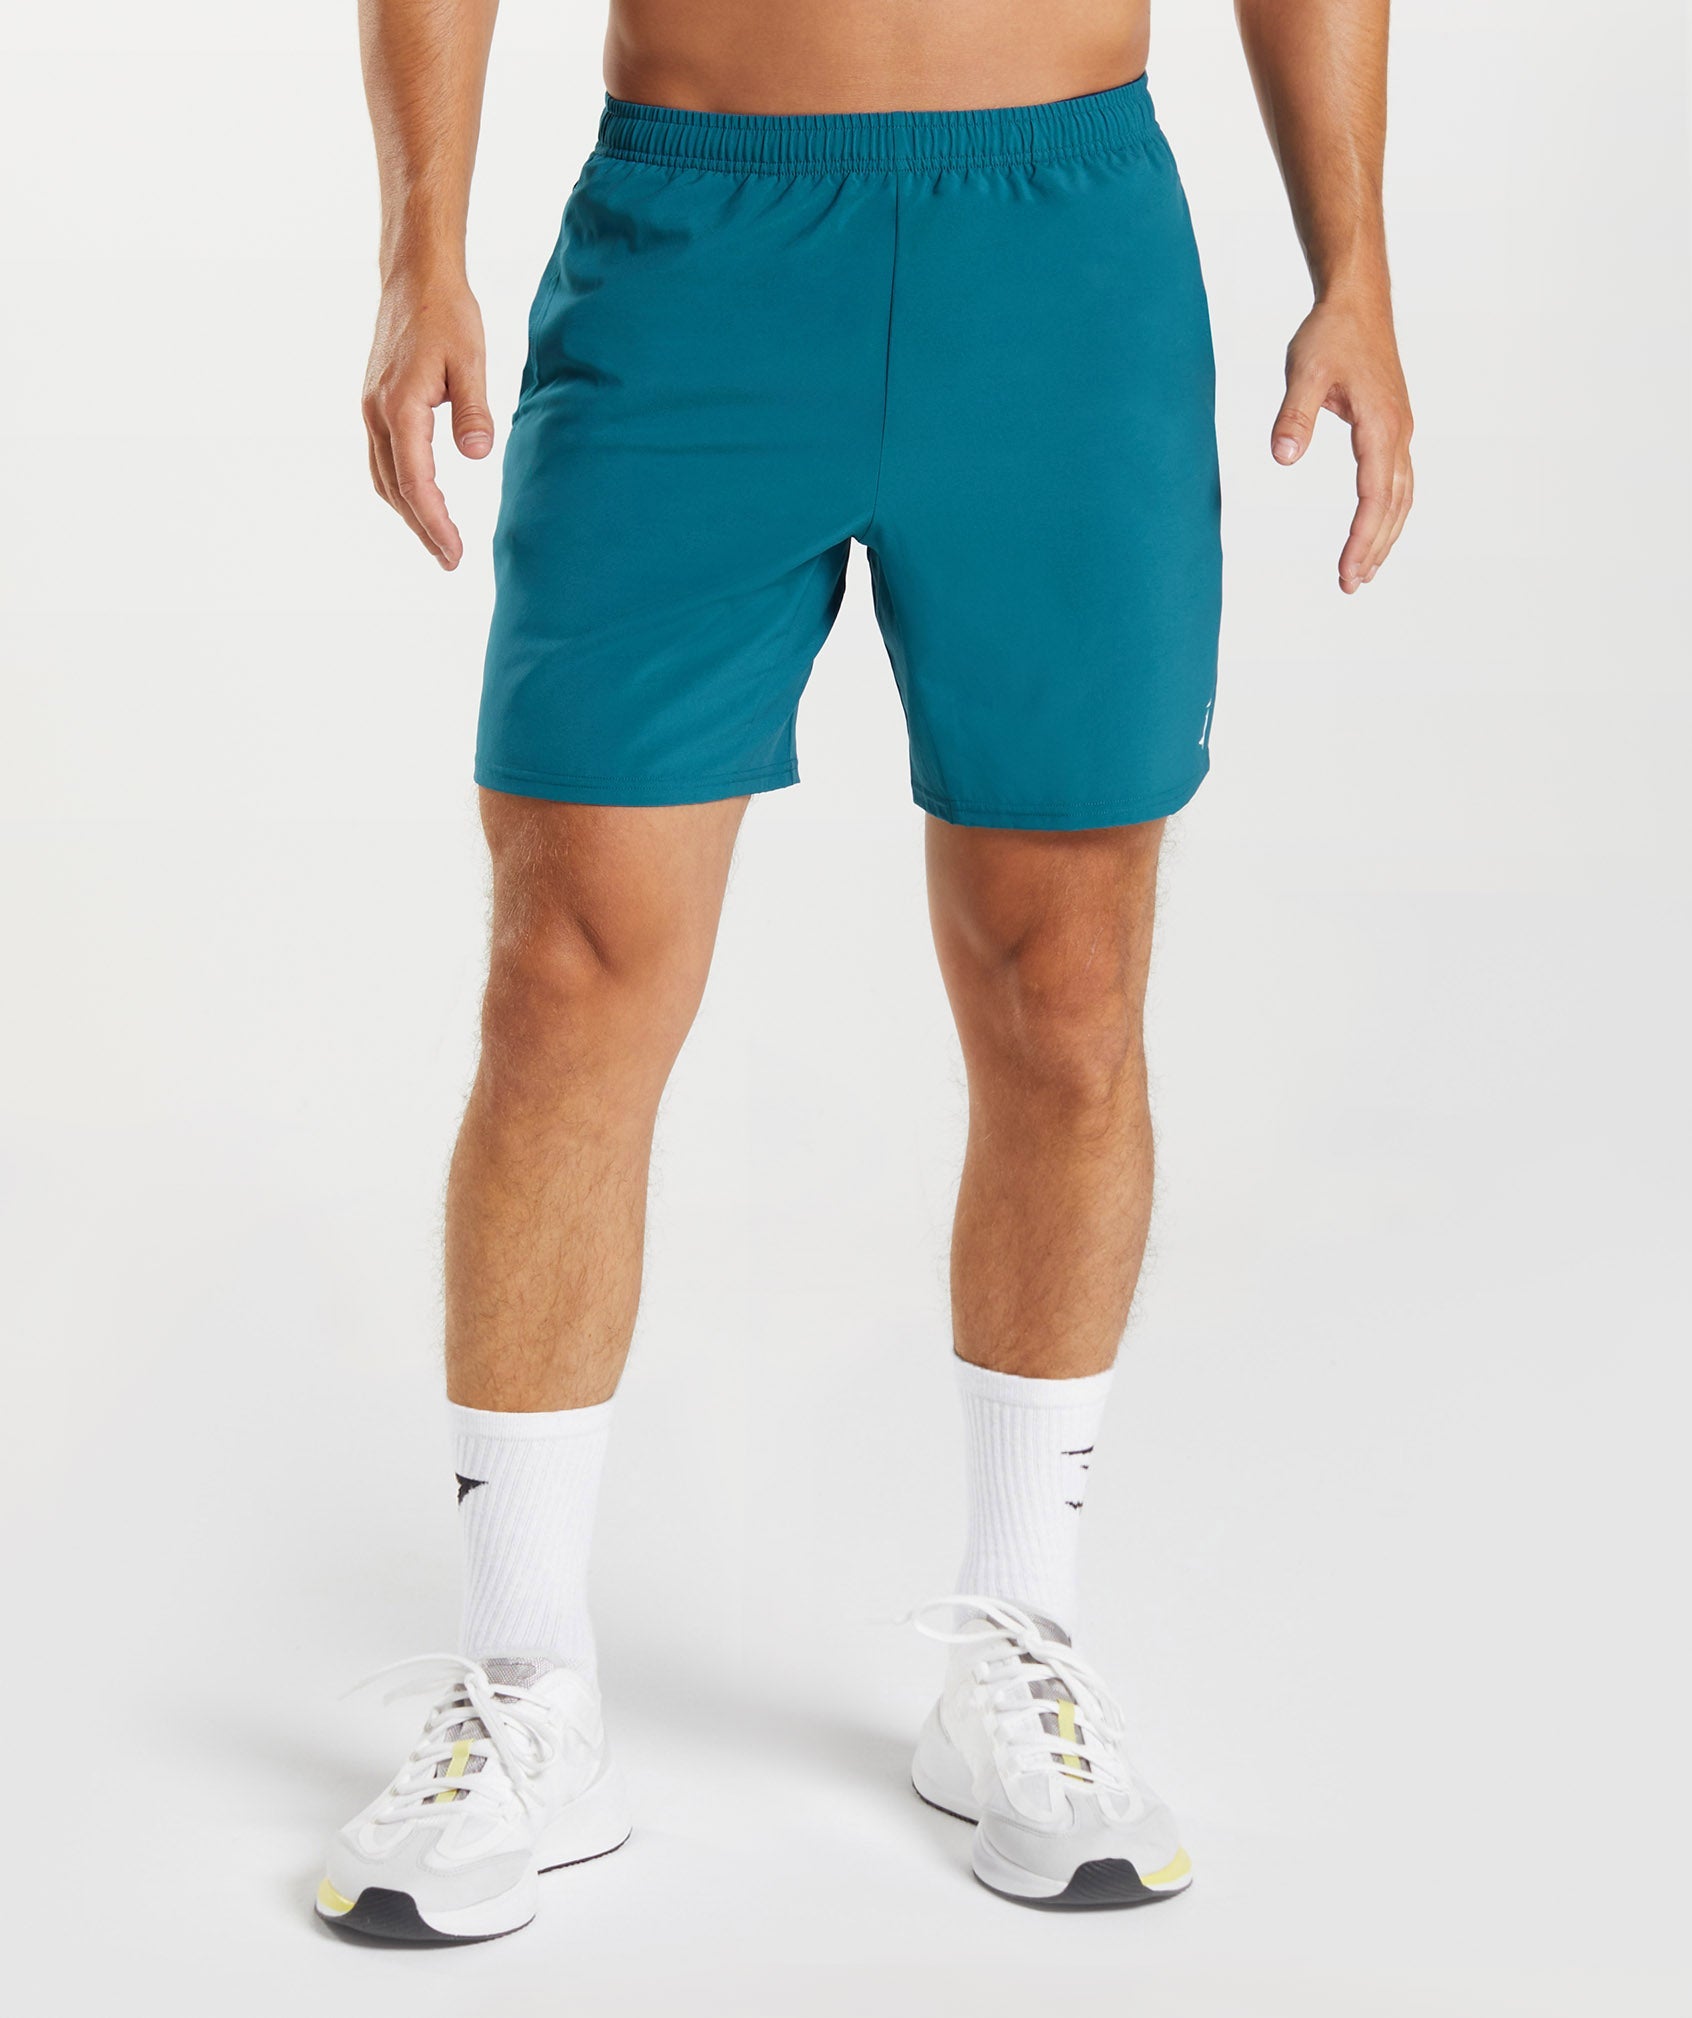 AYBL Define Work Out / Gym Shorts Size XL/UK14-16 RRP £30